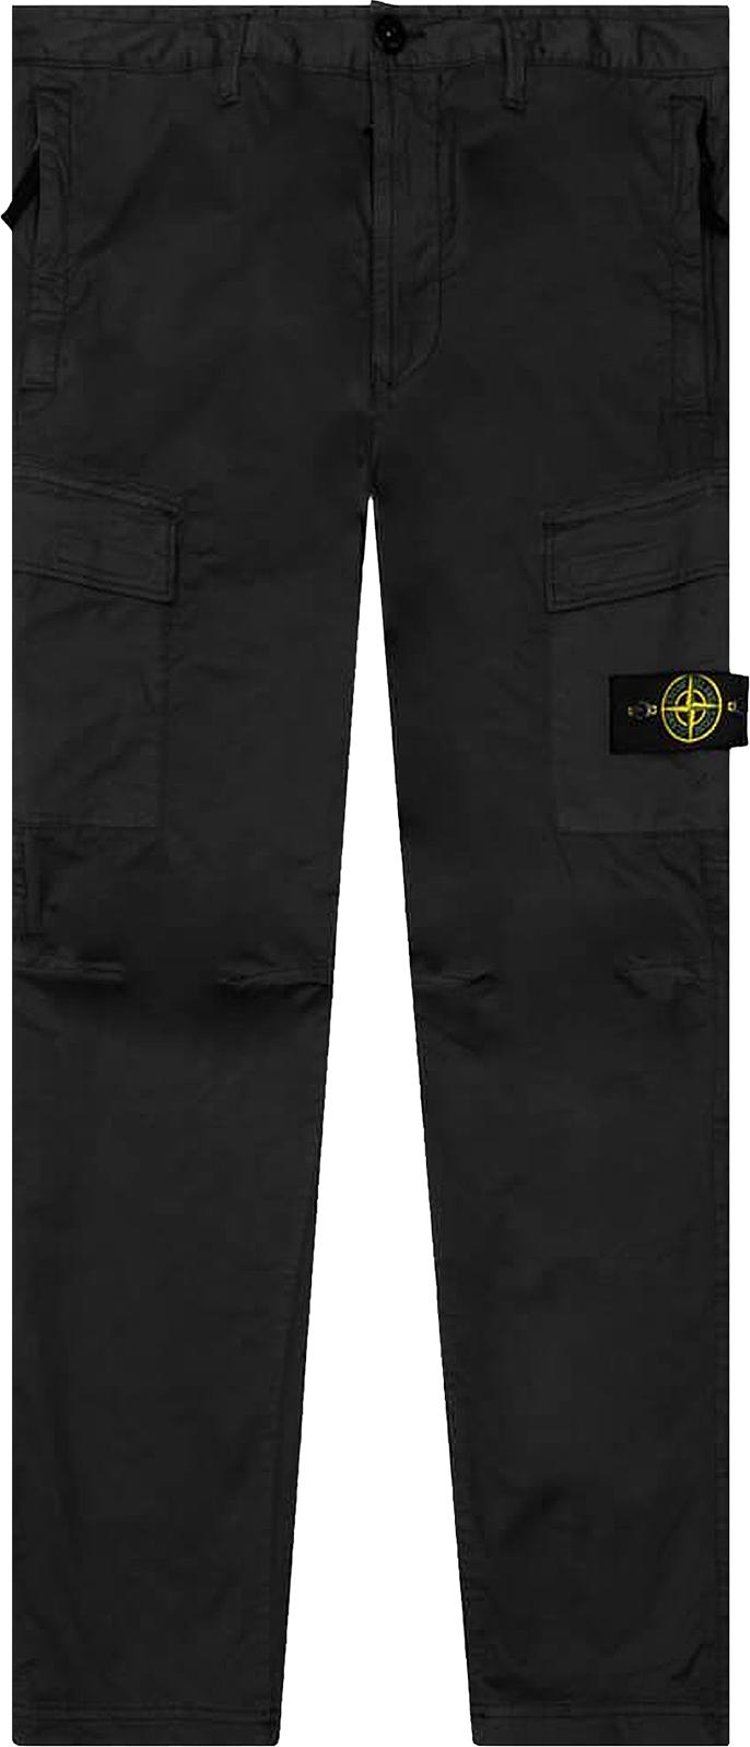 Buy Stone Island Cargo Pants 'Black' - 741530519 V0029 | GOAT